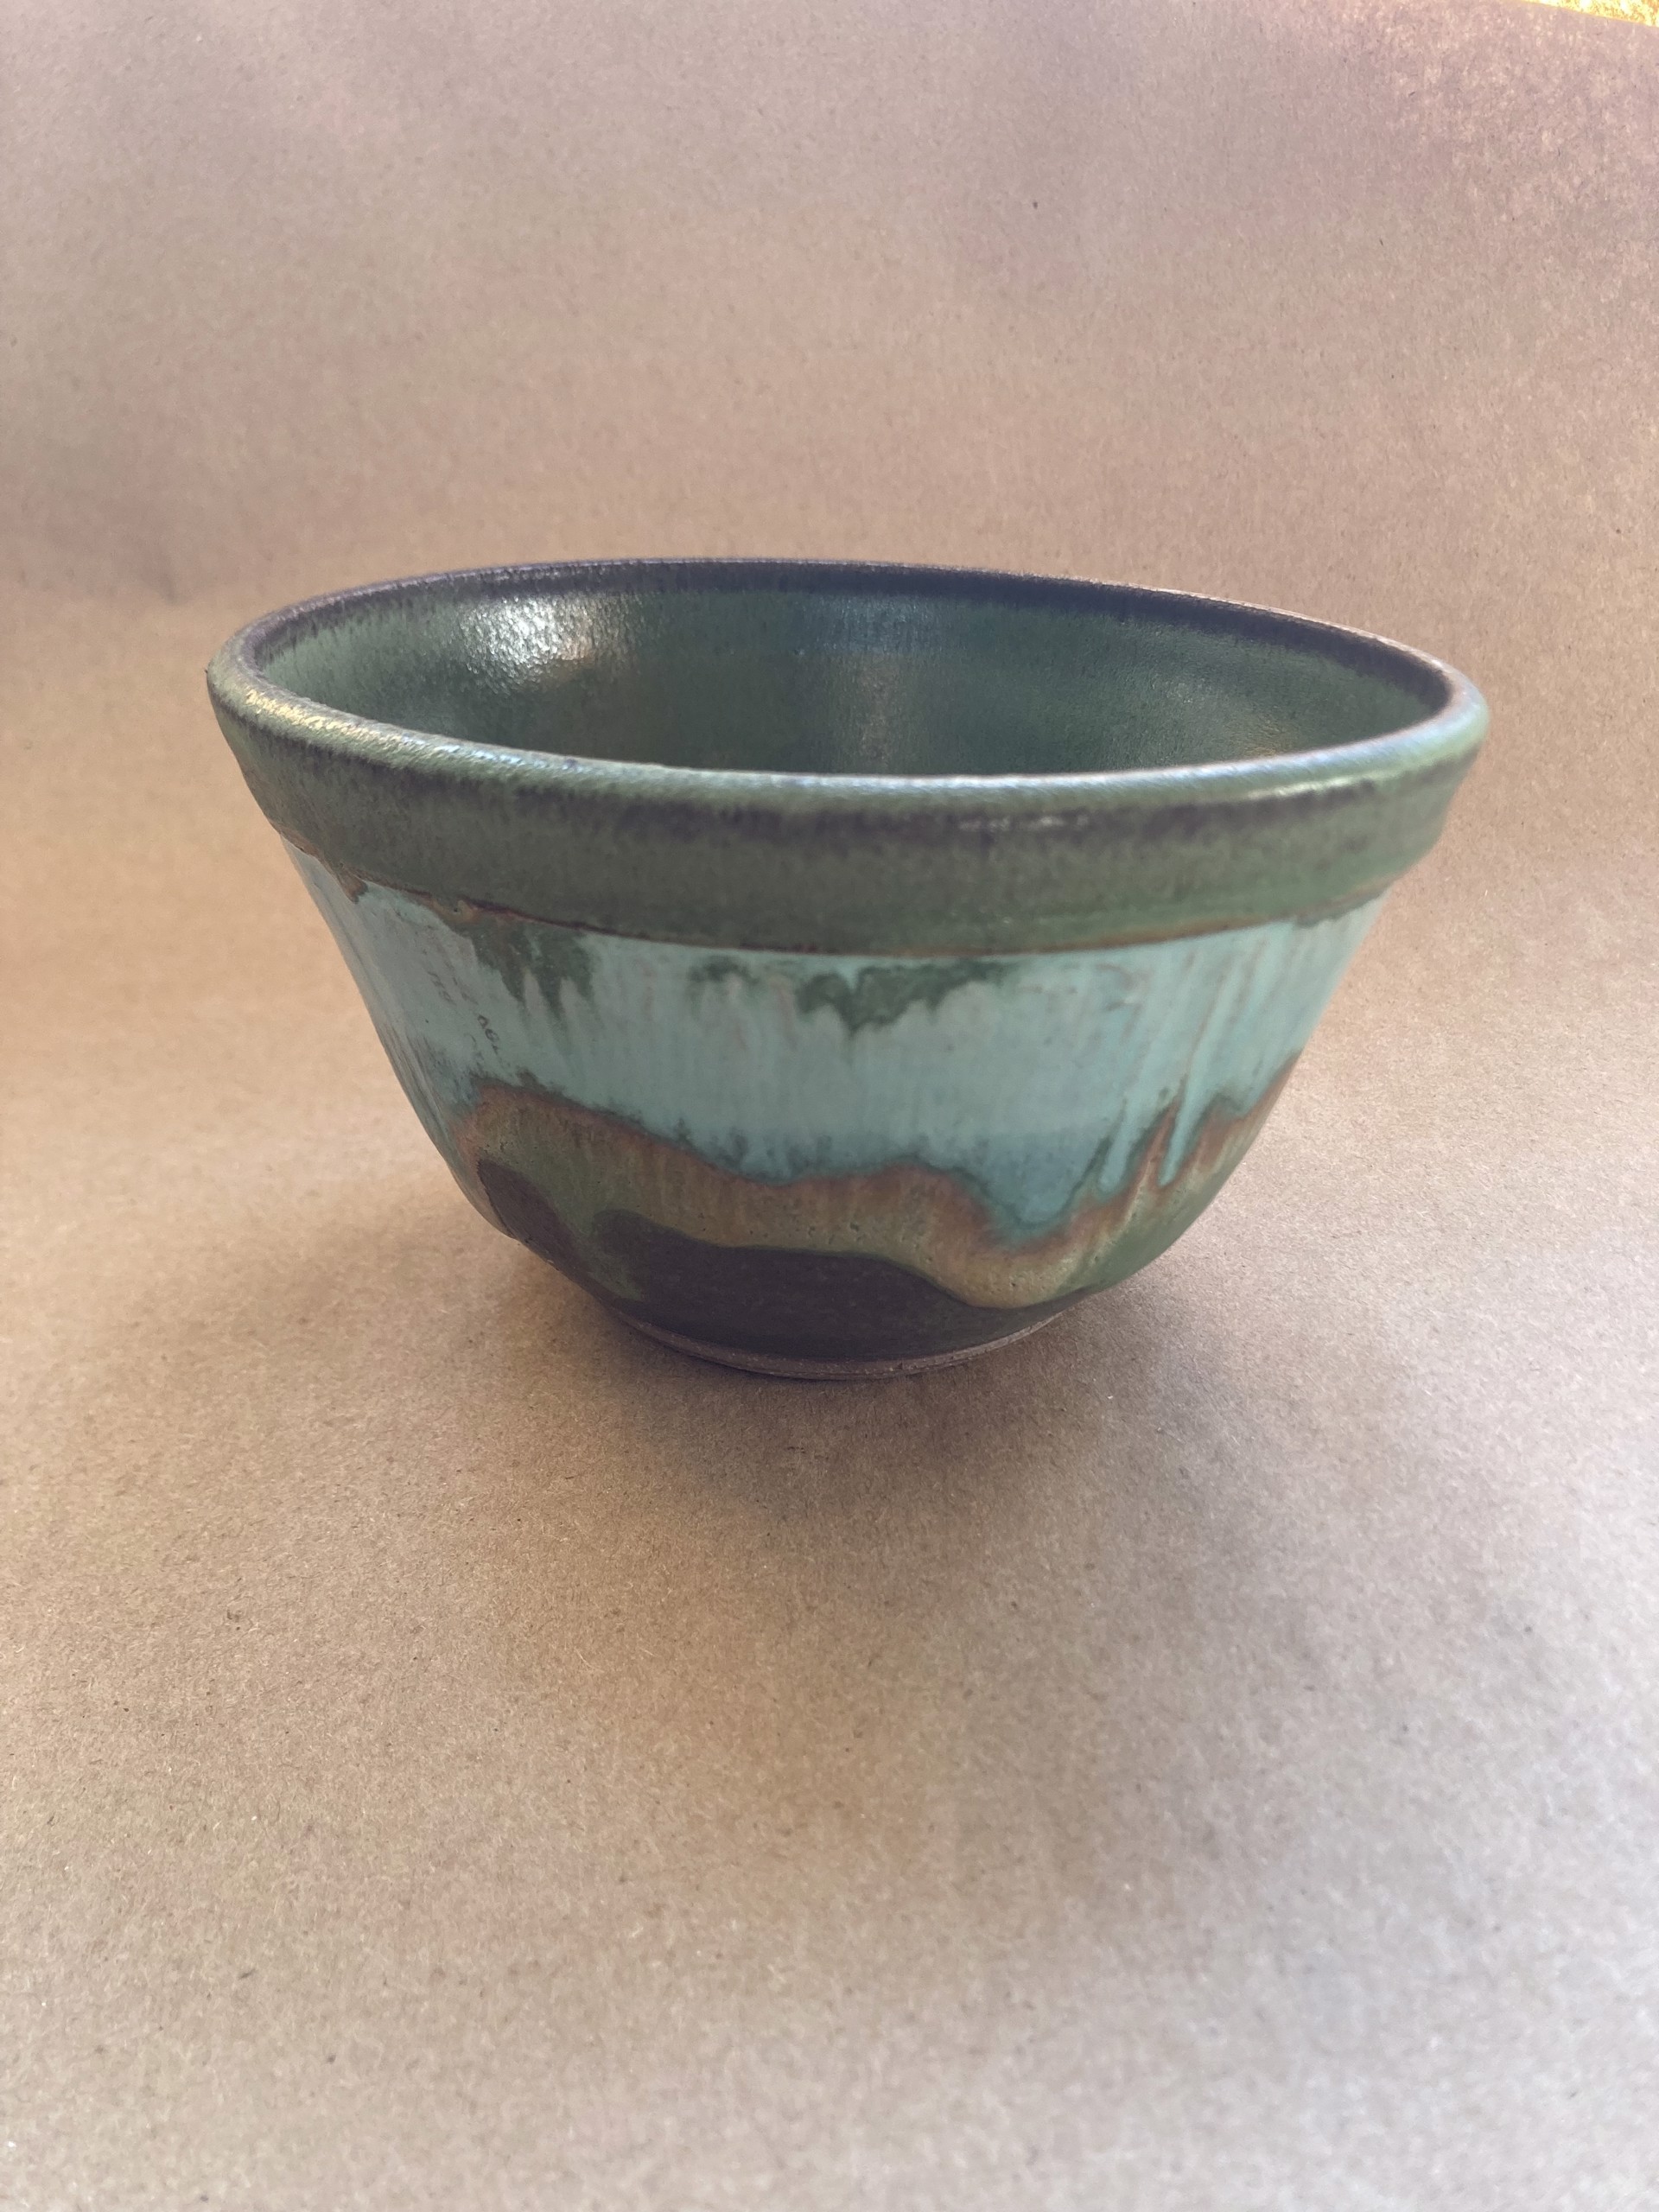 Small Green Bowl #21 by Sharon Scrattish